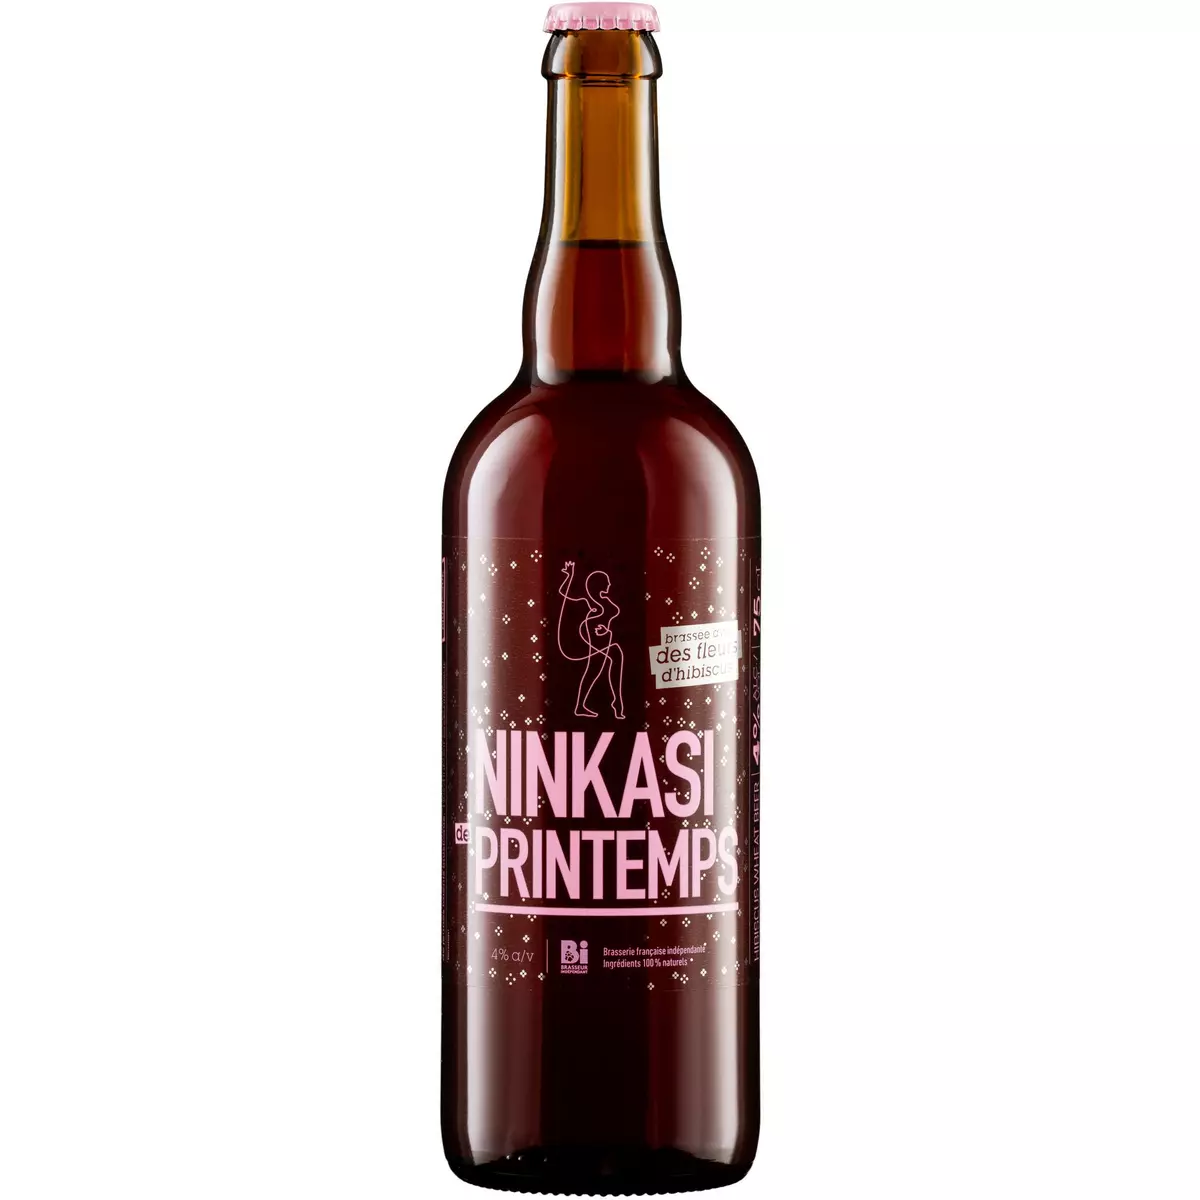 NINKASI Bière blonde de printemps 4% 75cl